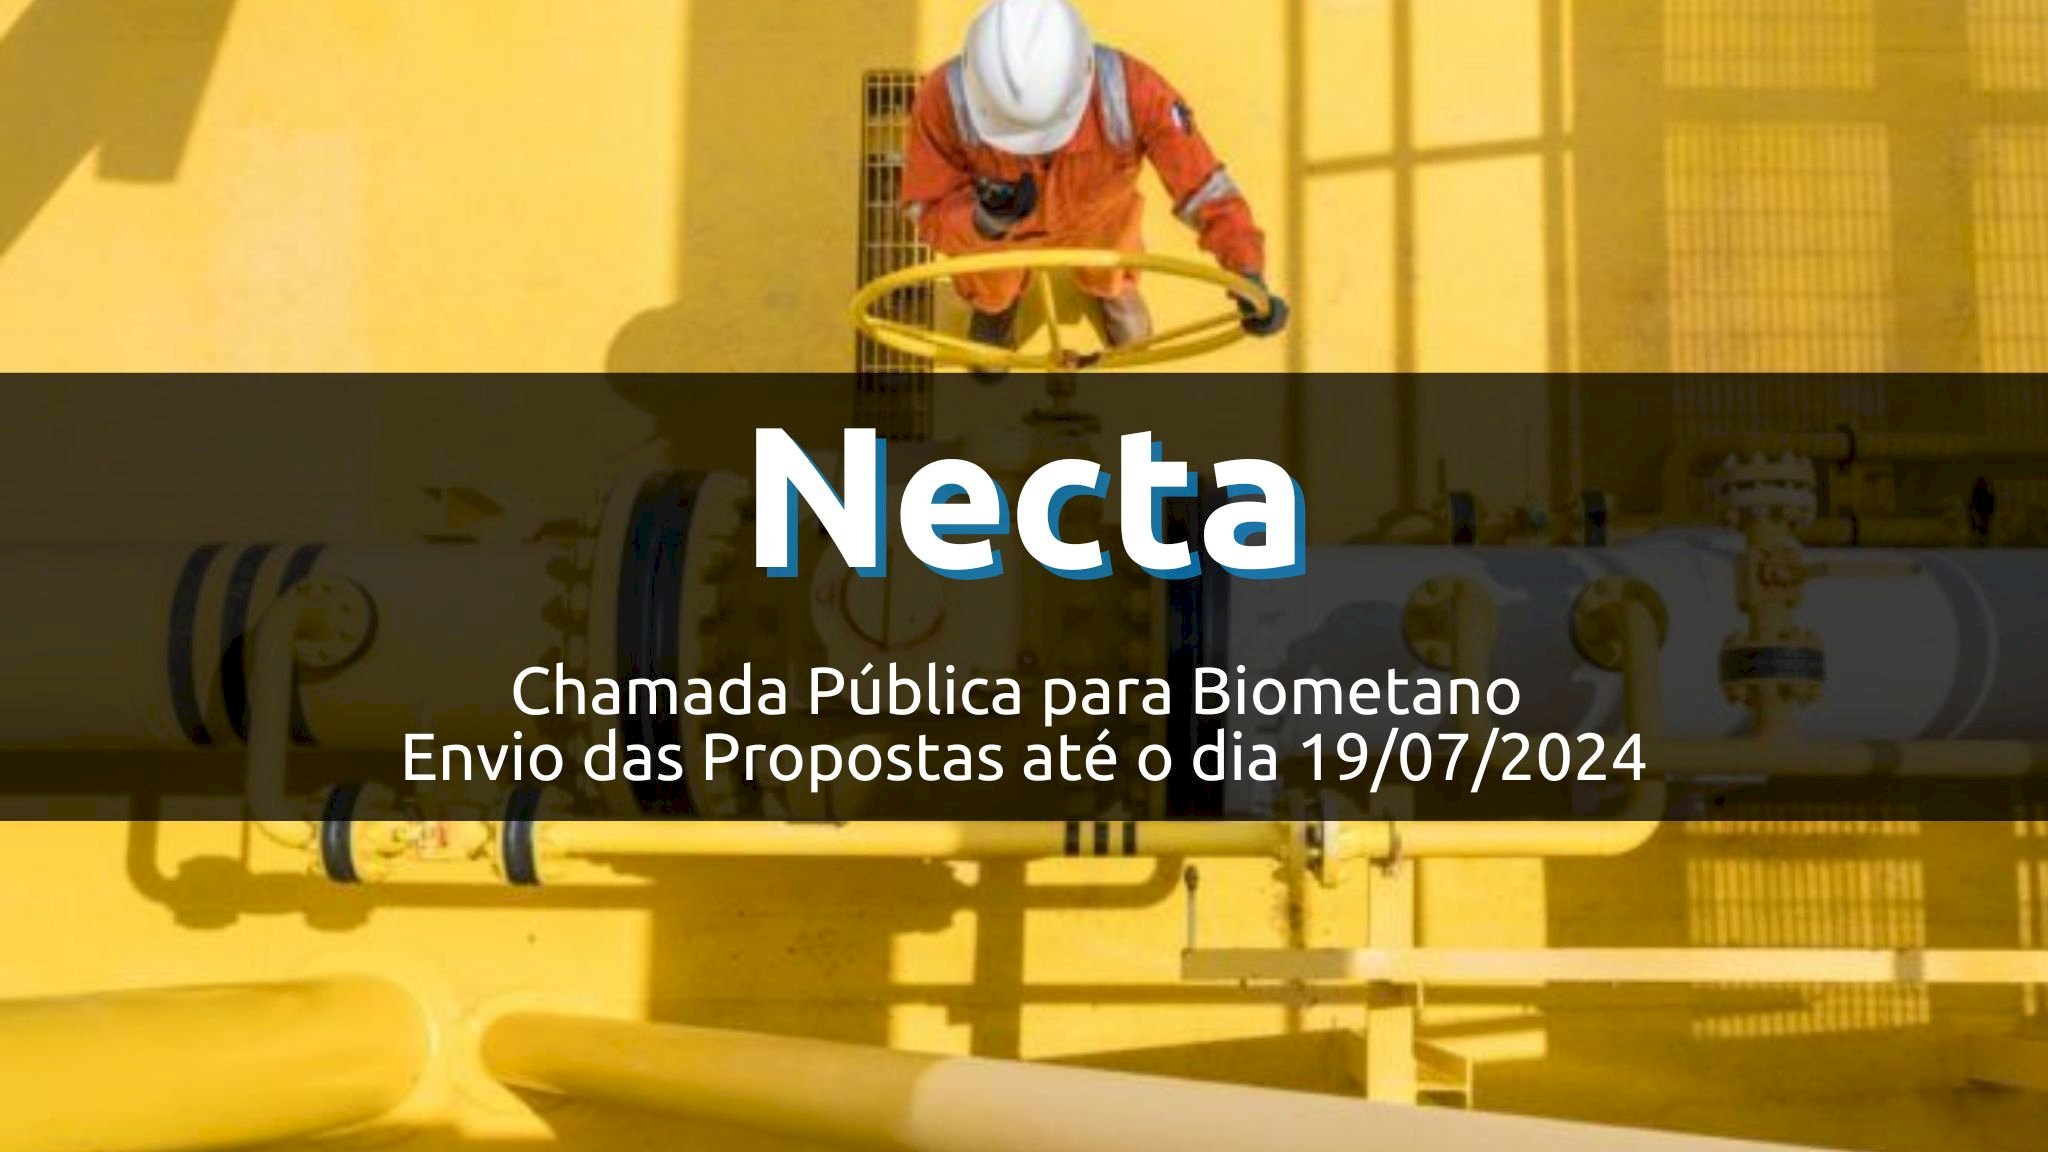 Necta - Chamada Pública para Biometano